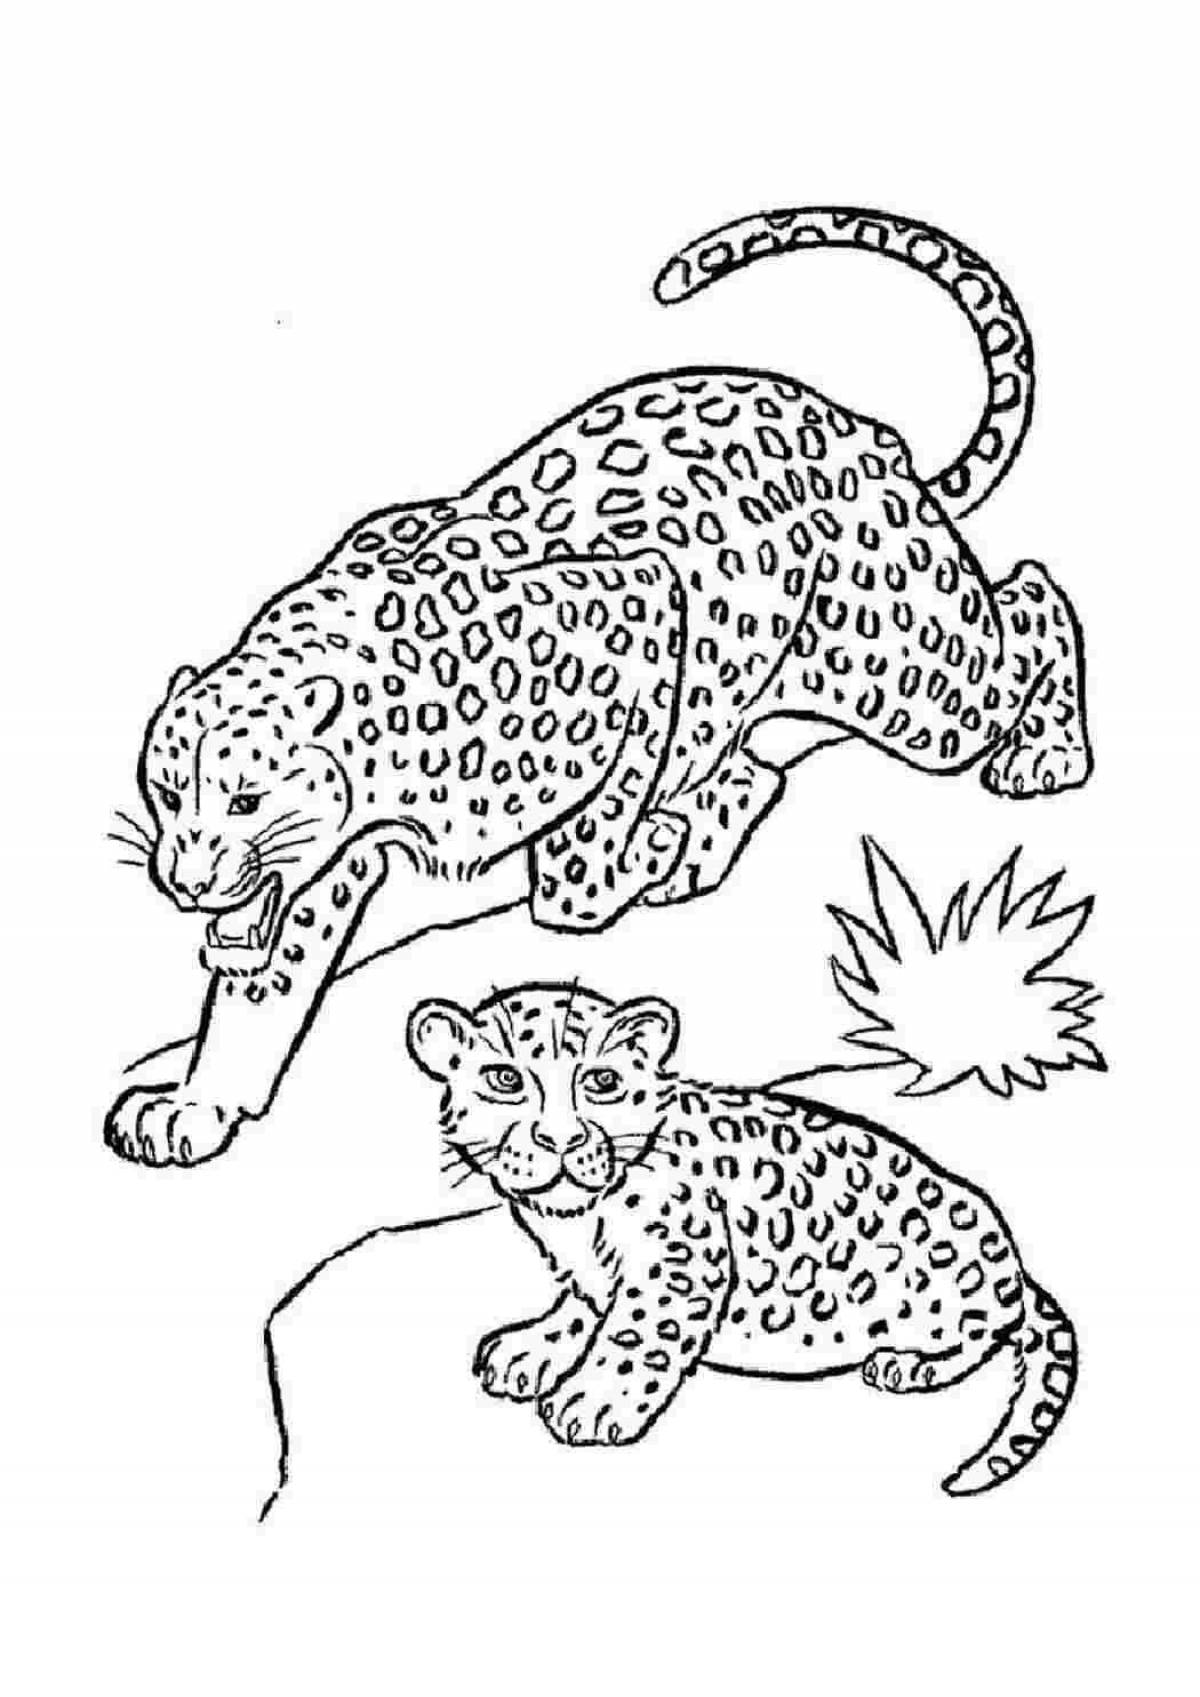 Coloring book amazing leopard cat